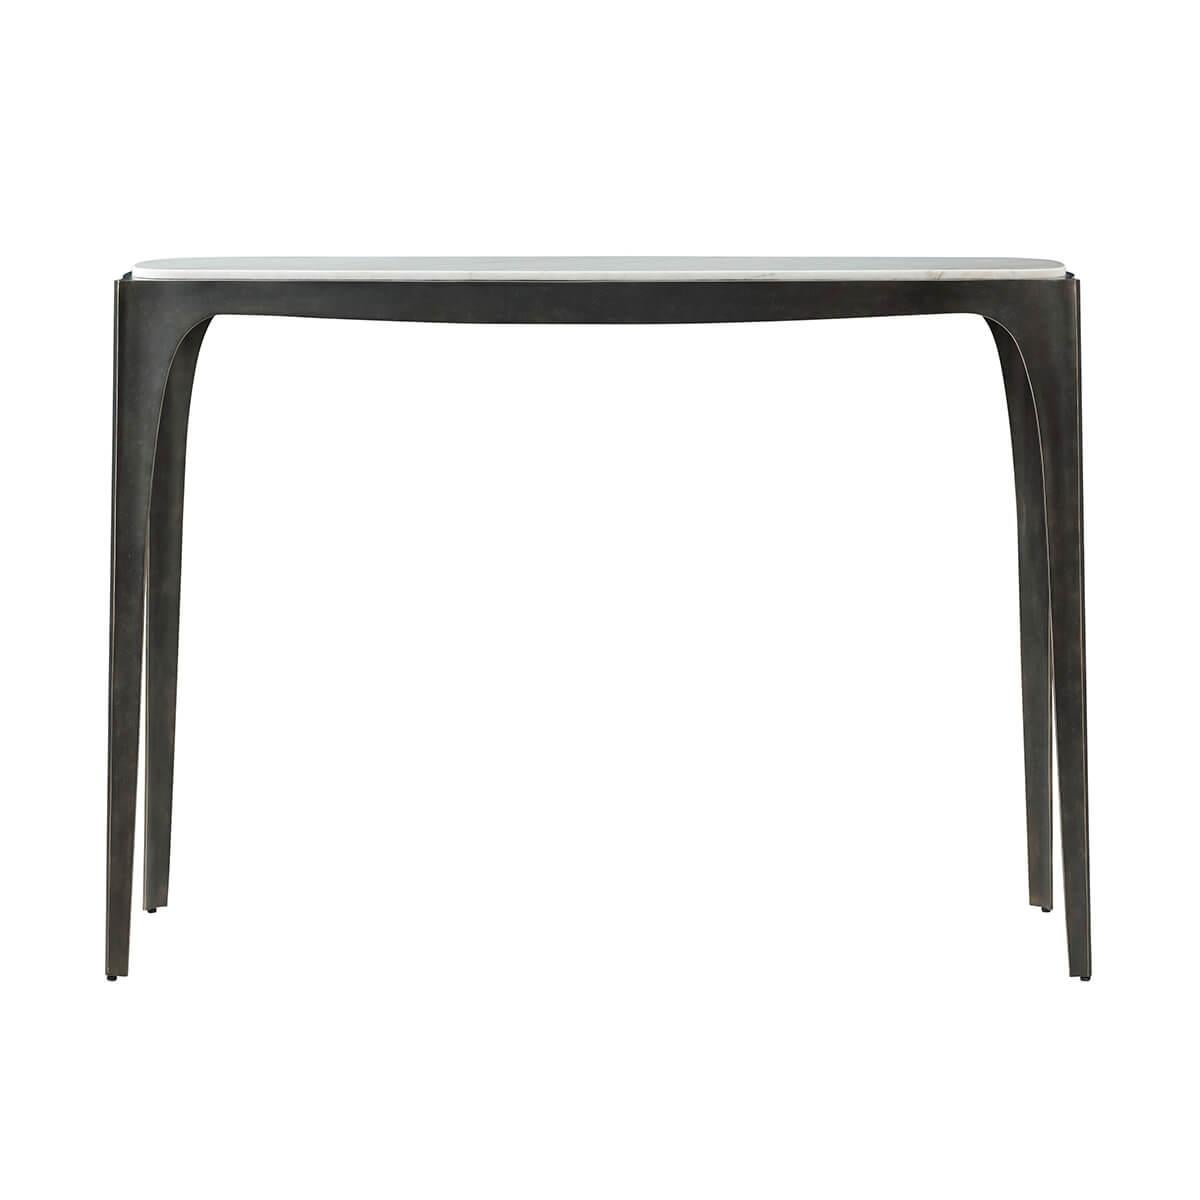 Minimalist Italian Modernist Console Table For Sale